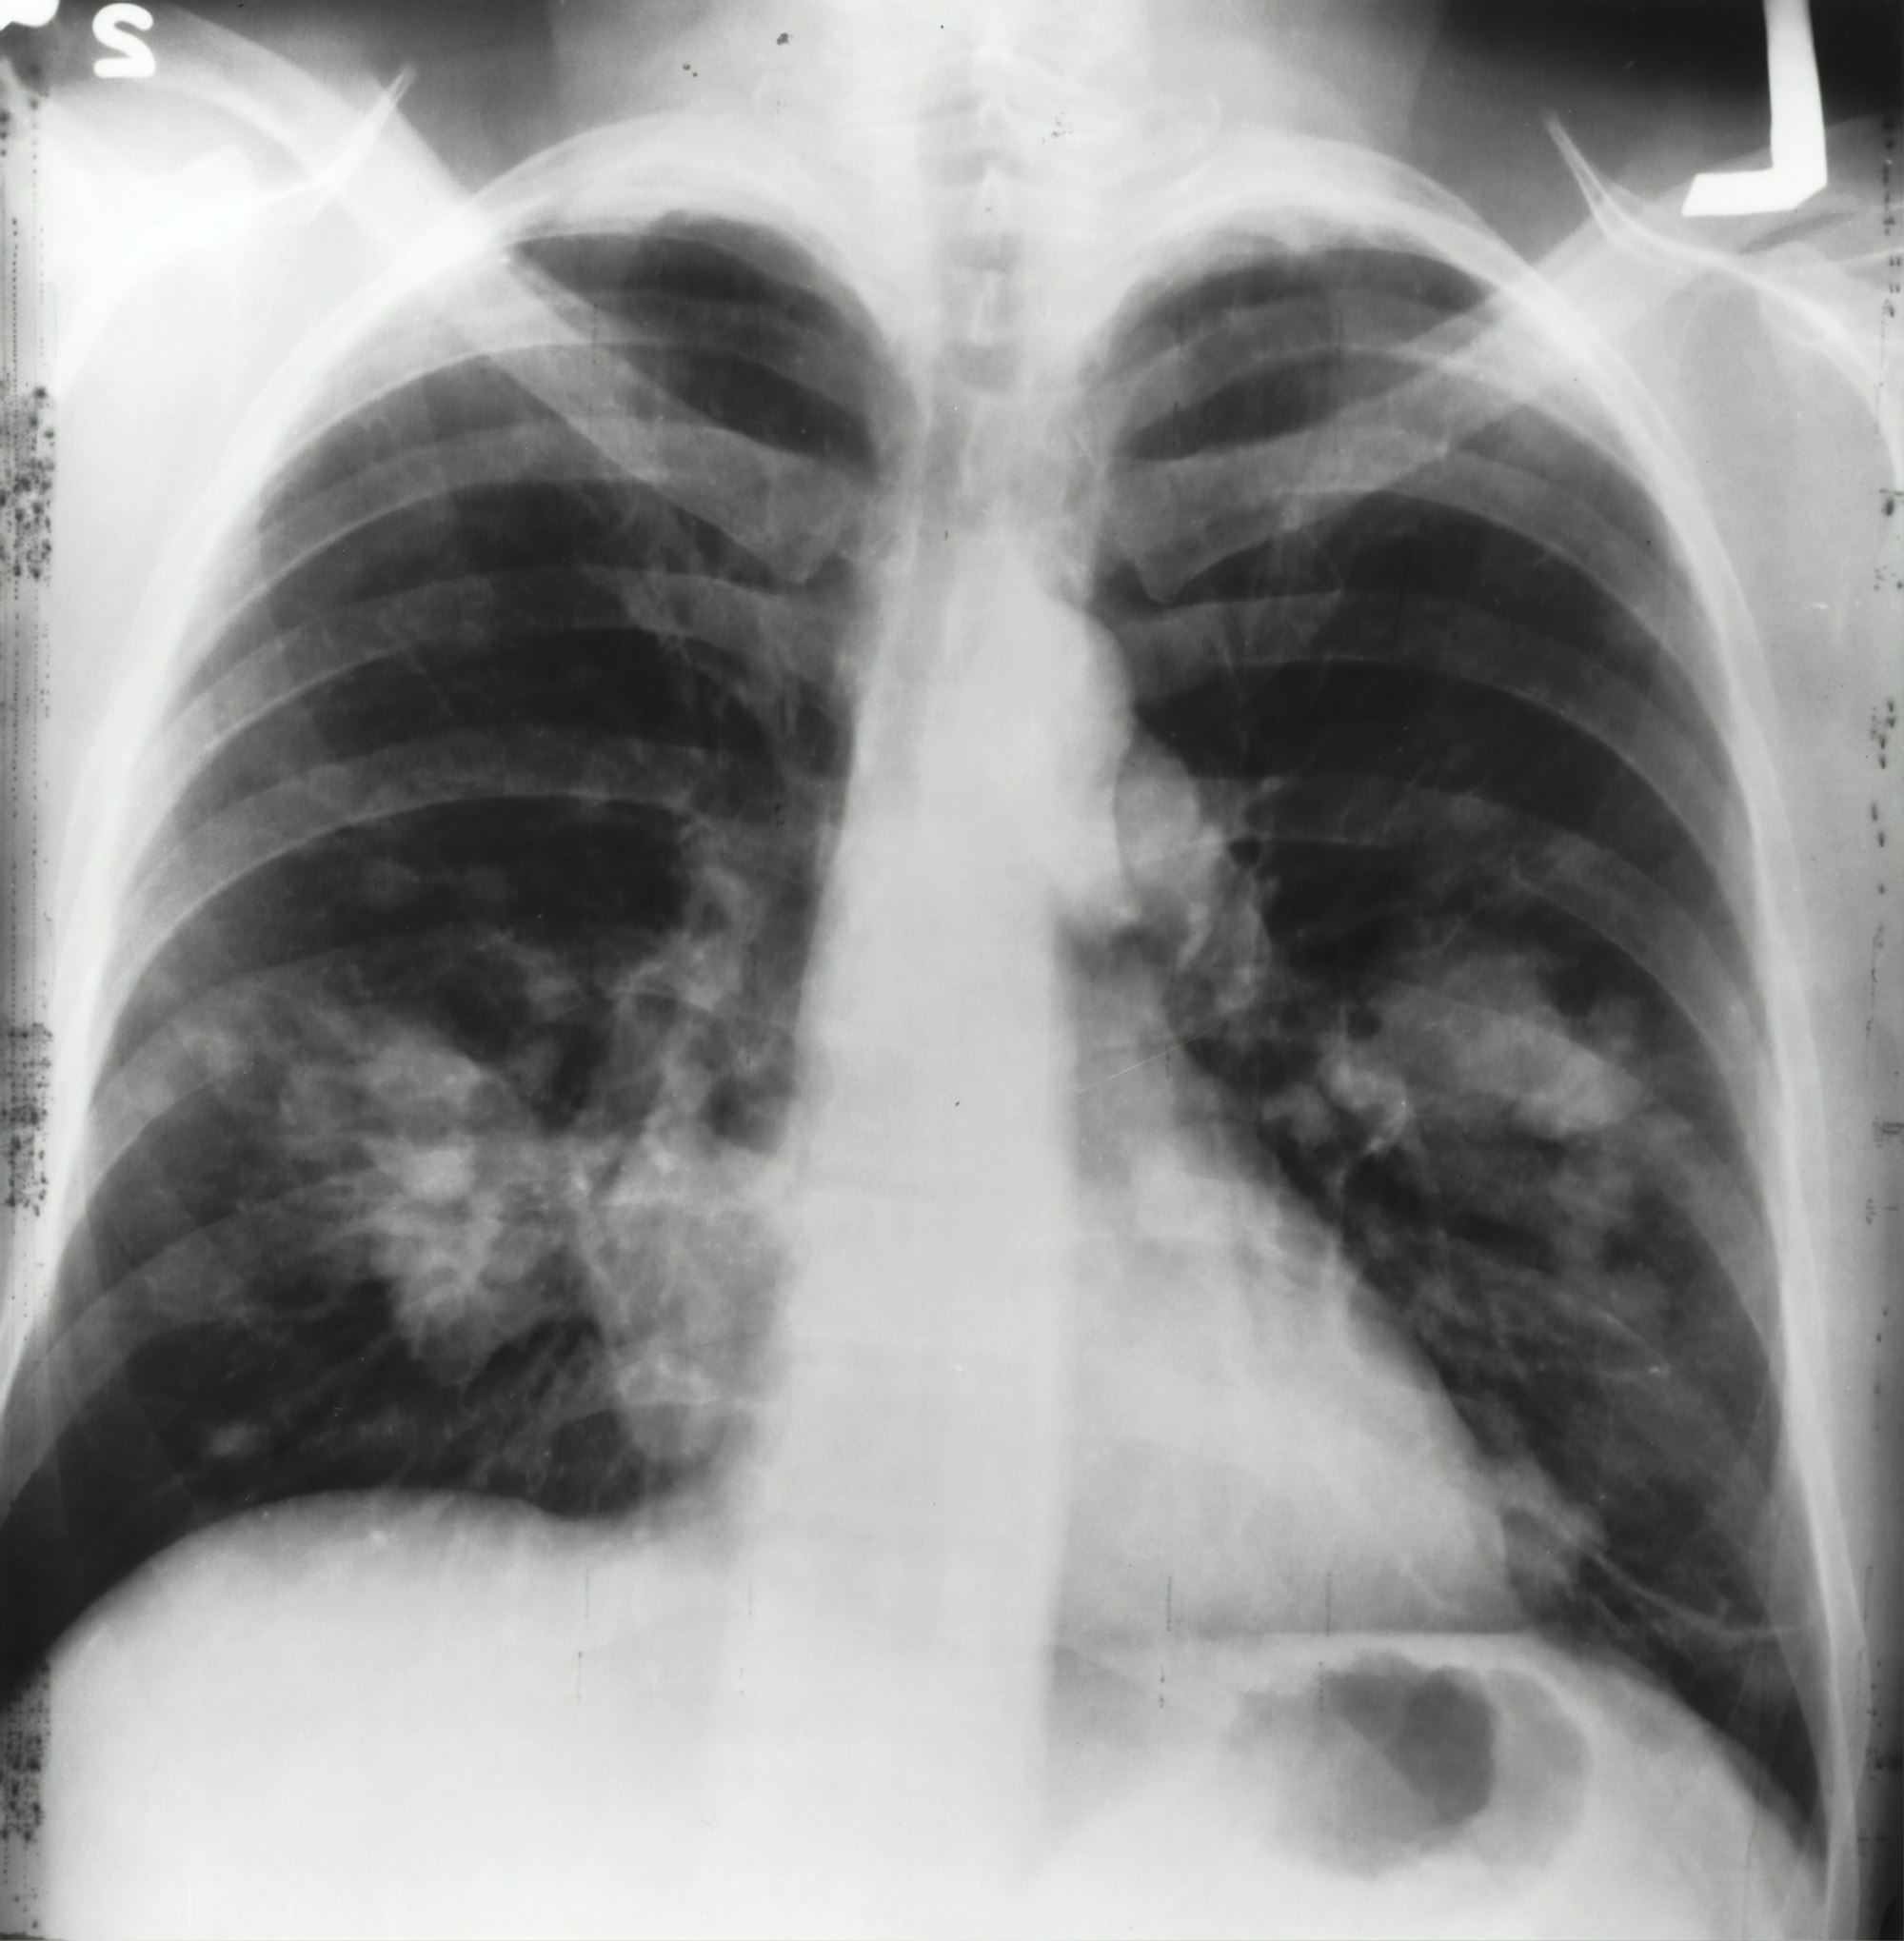 Ventilator Associated Pneumonia